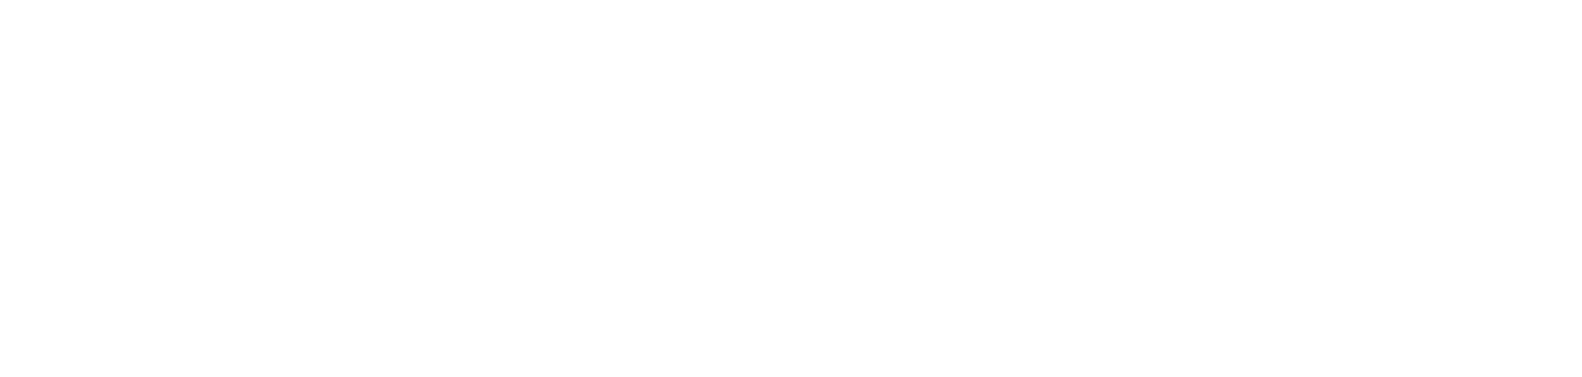 DMG Mori logo for dark backgrounds (transparent PNG)